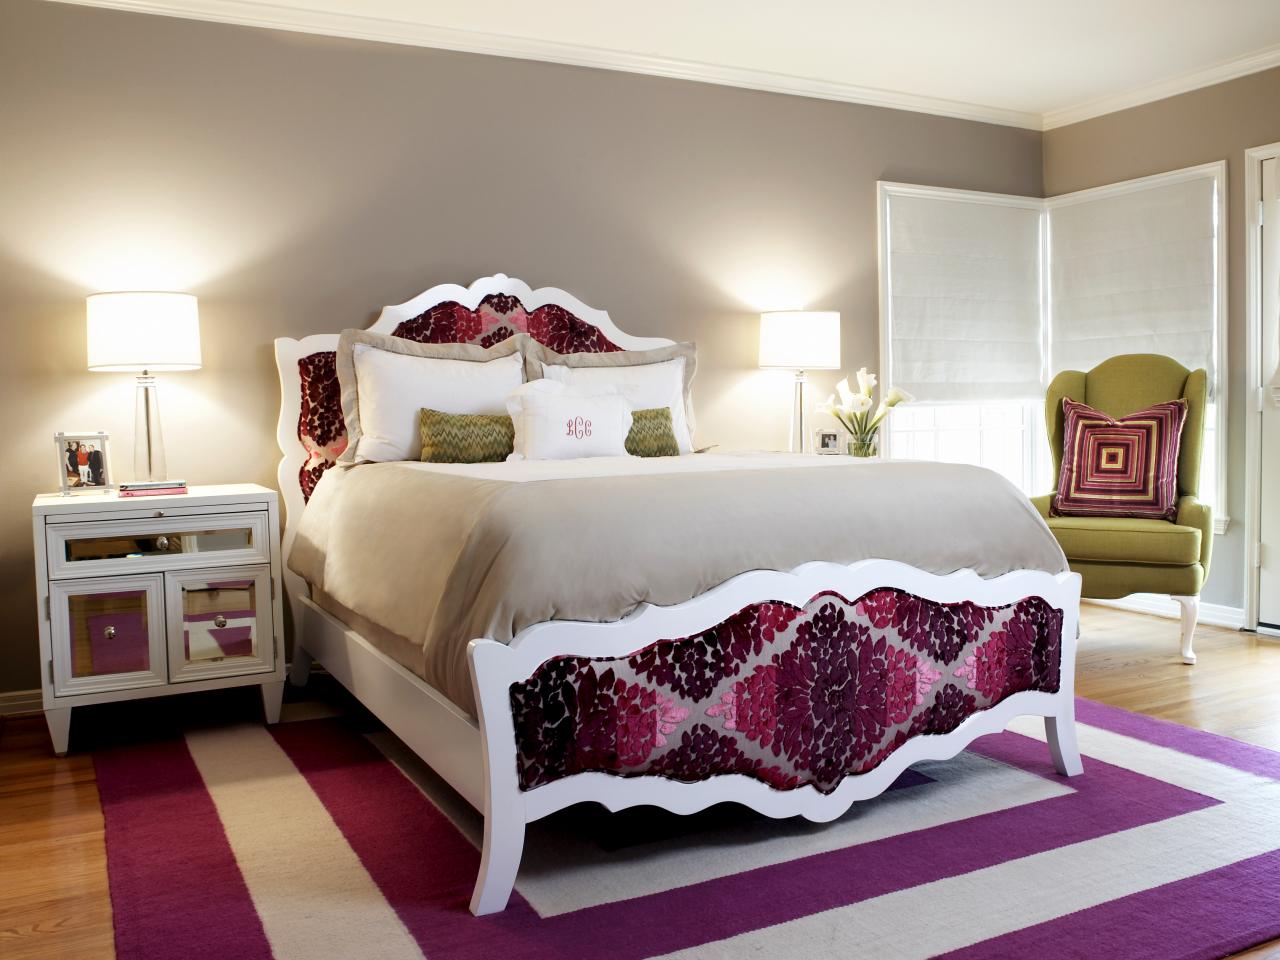 Warm Bedroom Color Schemes Pictures, Options & Ideas HGTV